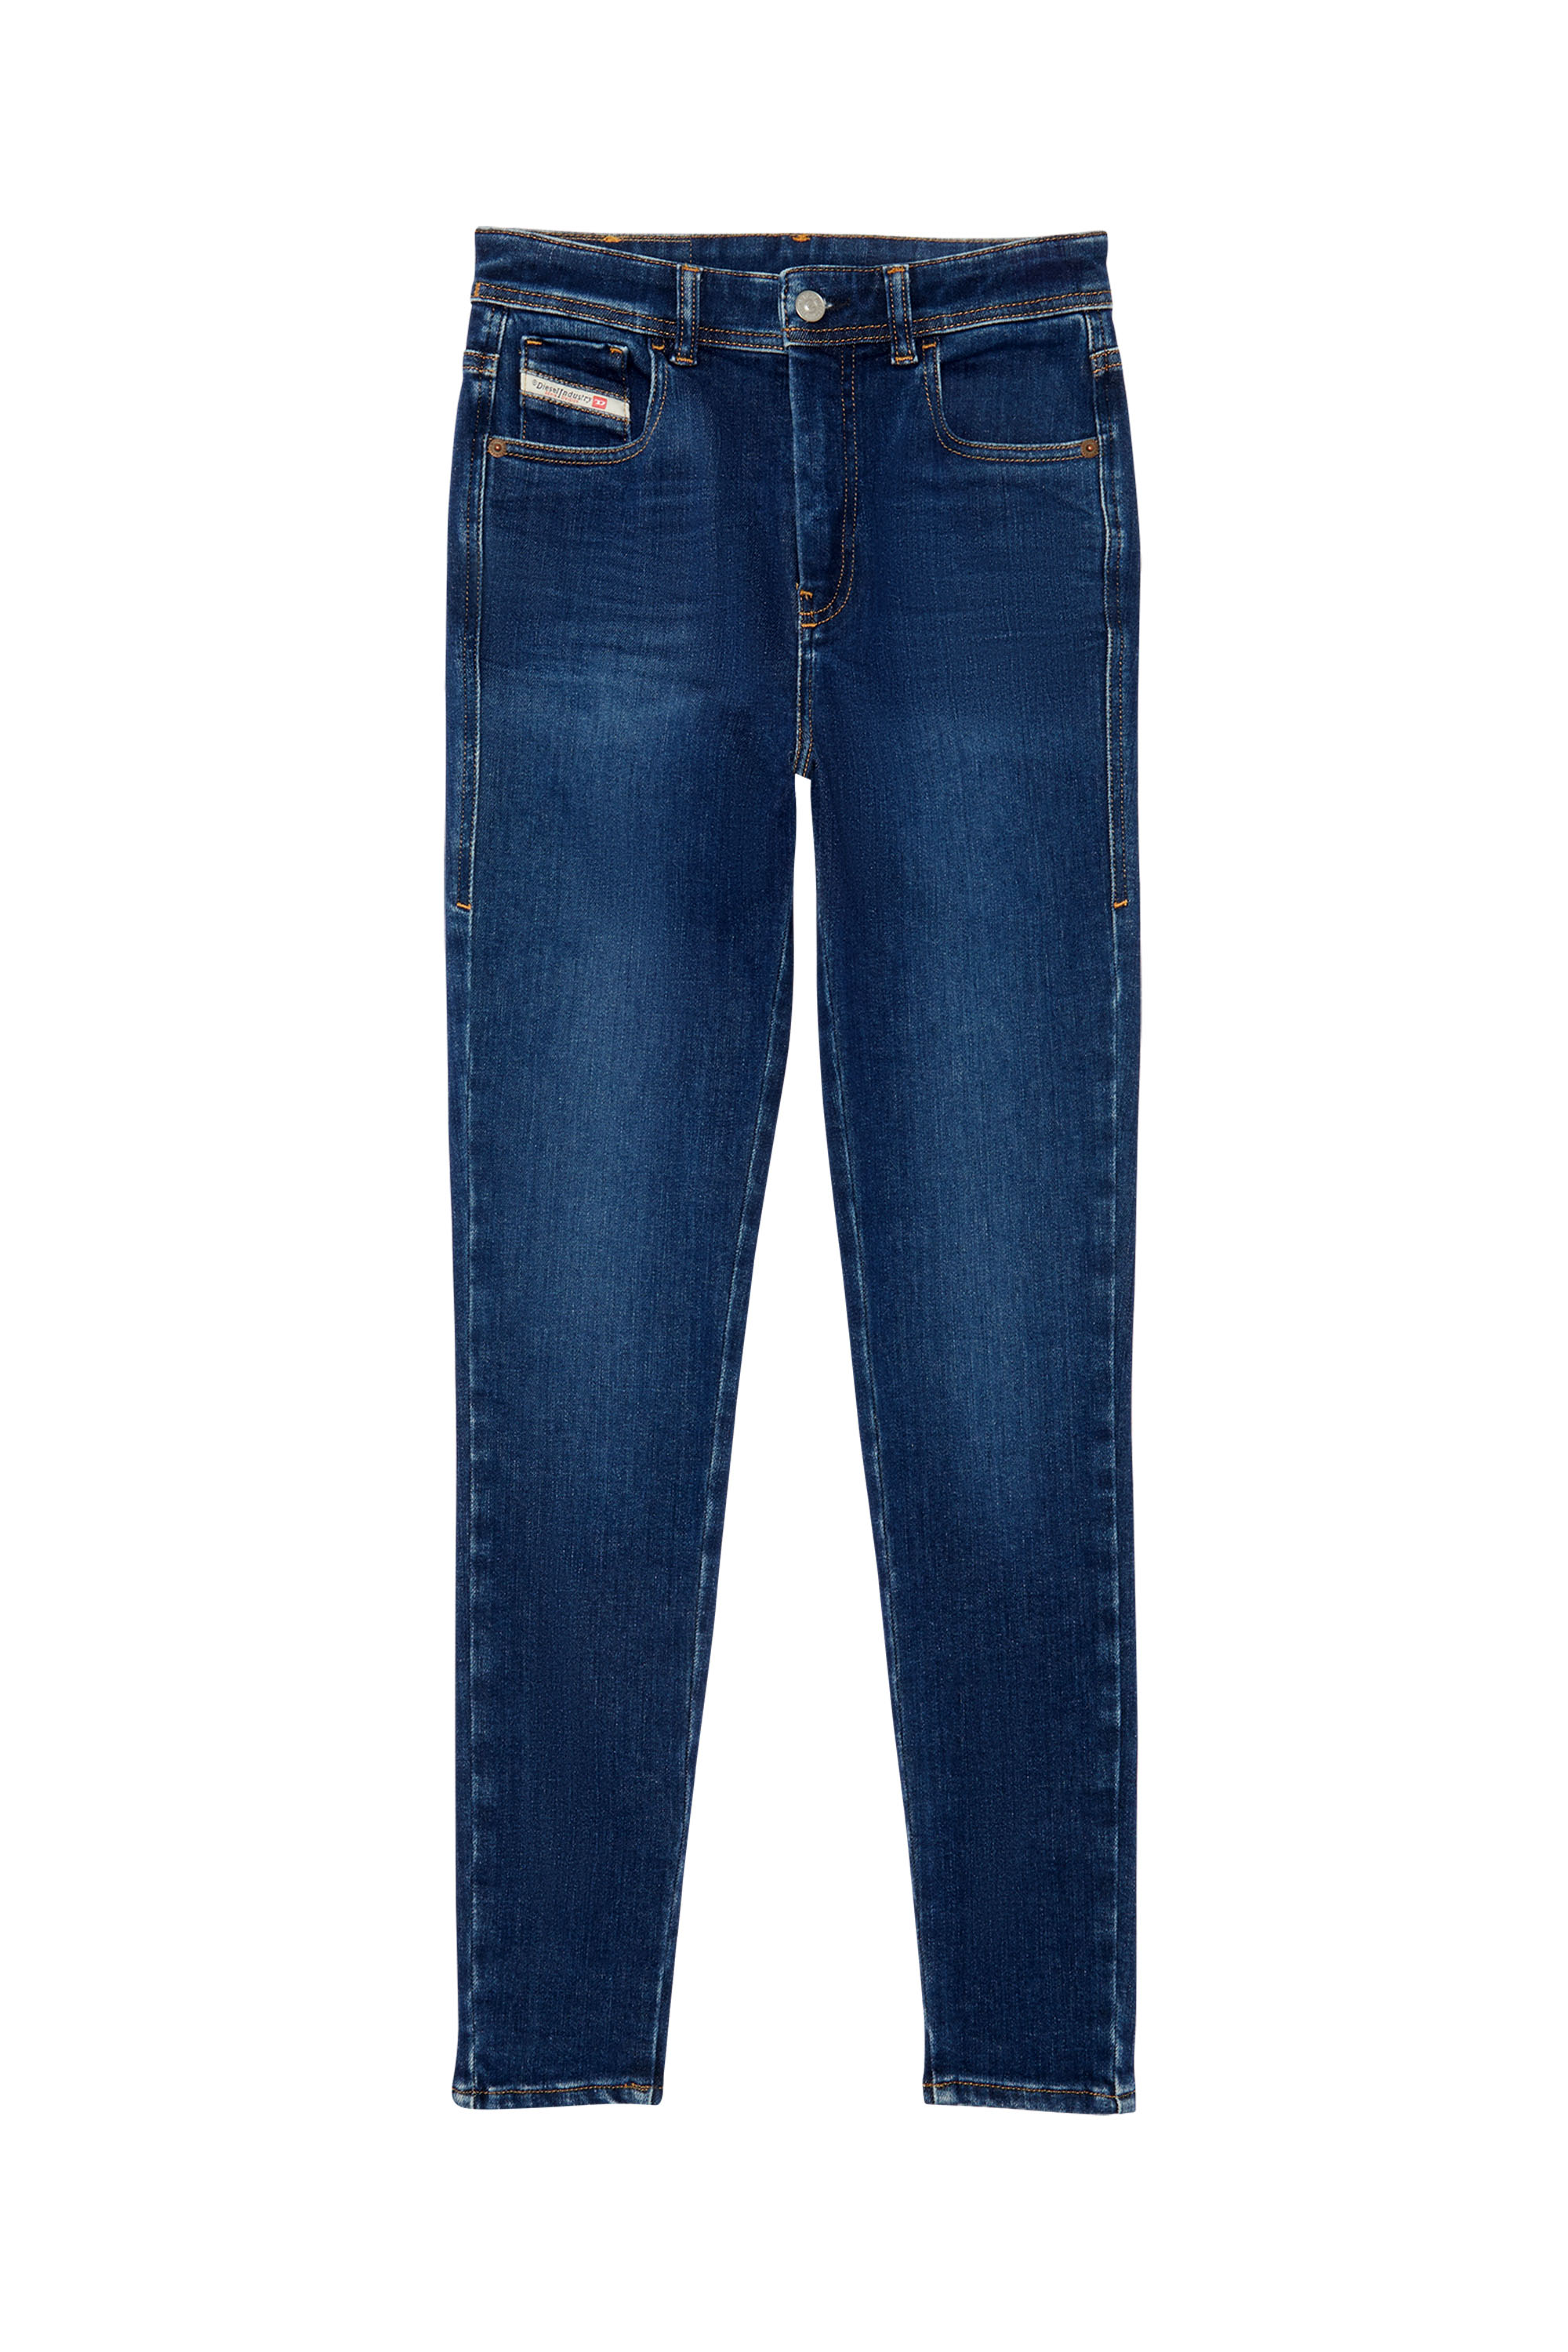 1984 SLANDY-HIGH 09C19 Super skinny Jeans, Bleu Foncé - Jeans